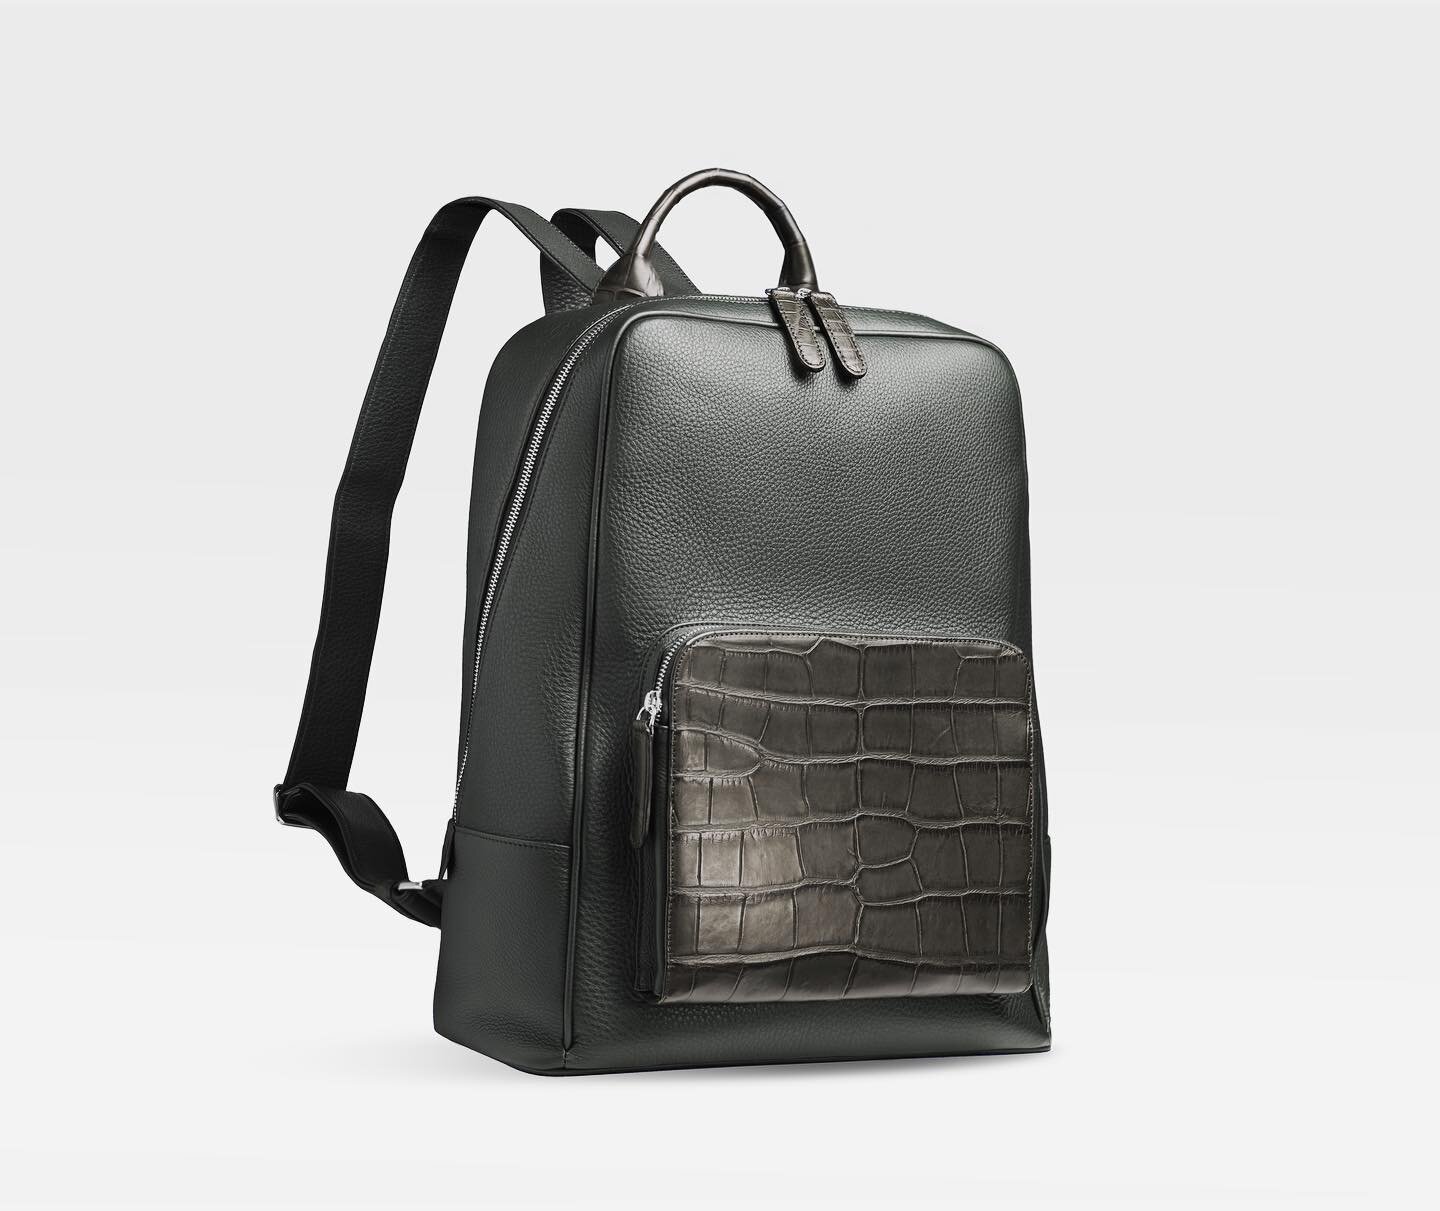 Premium packshot #9
Aligator backpack 🐊
#productphotography #packshots #ecommerce #shopify